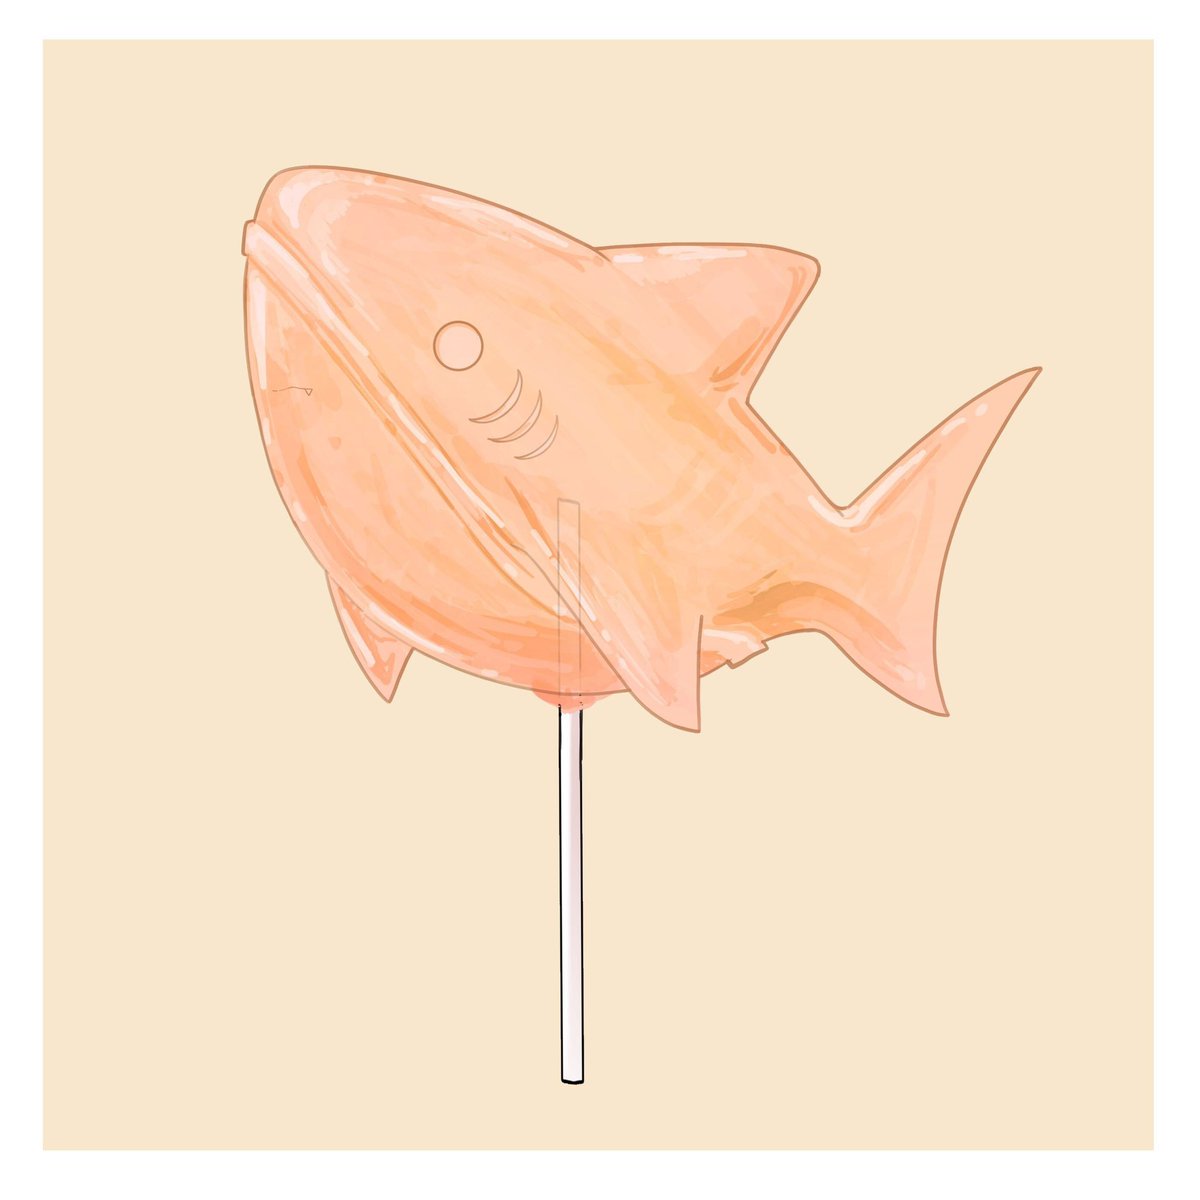 no humans border white border simple background pink background food fish  illustration images